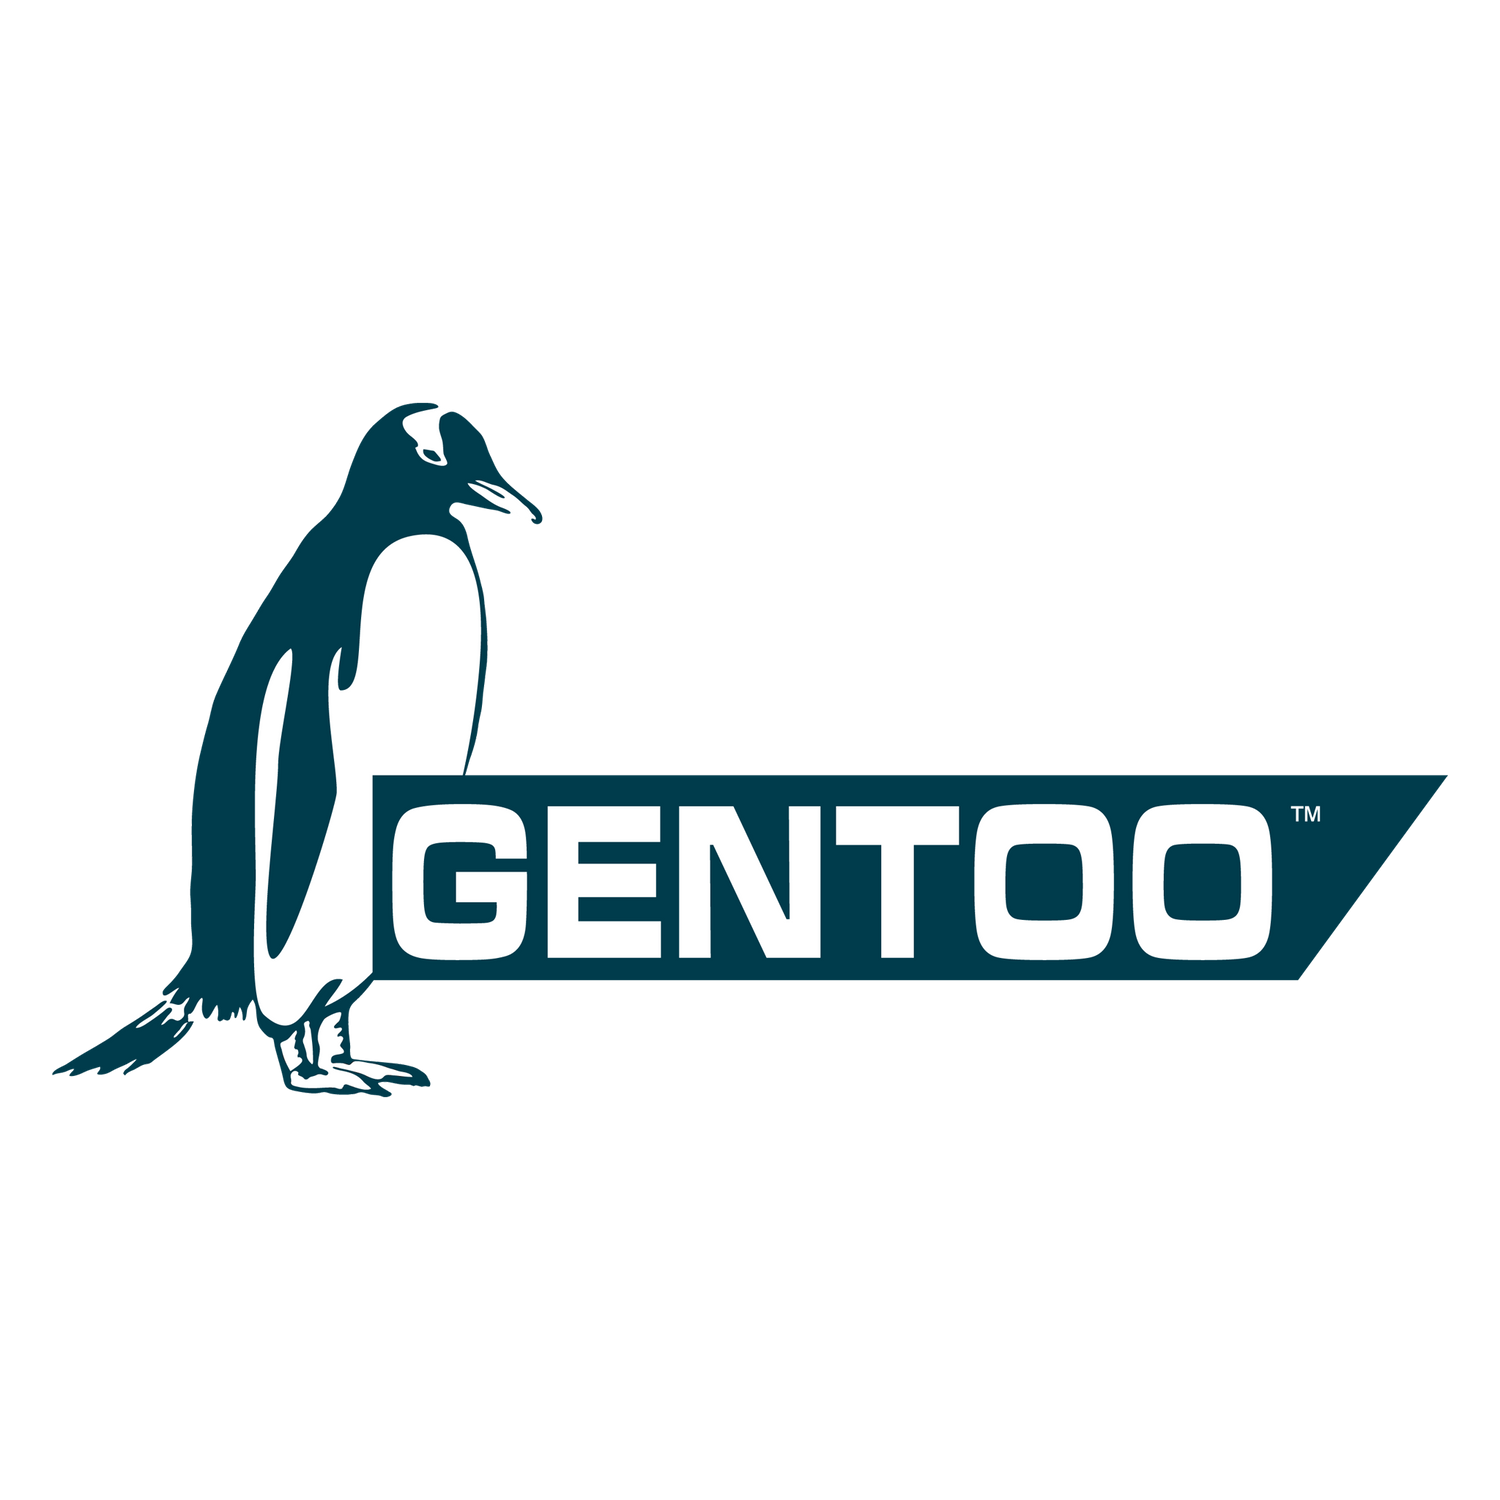 Gentoo Parcel Solutions